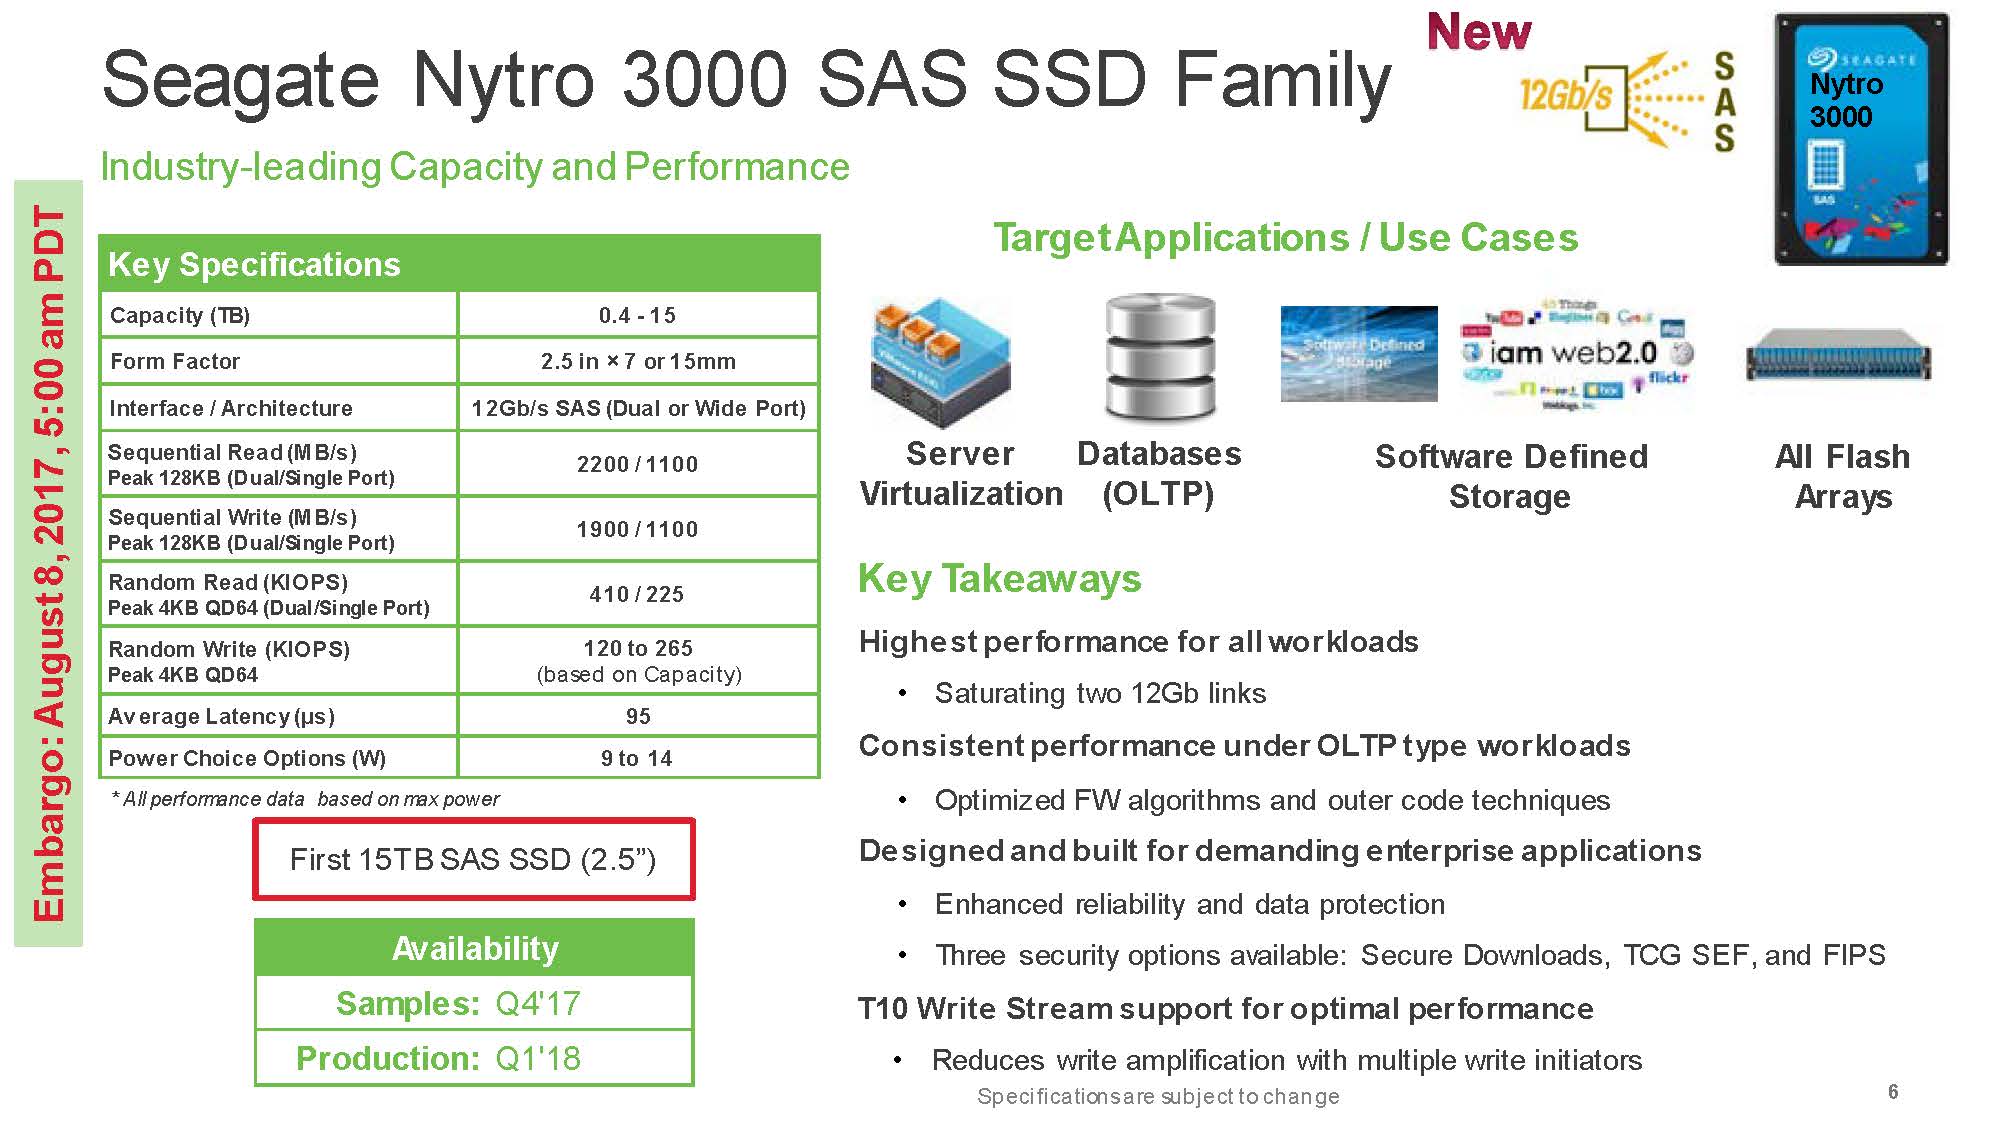 Stream support. Ссд 64tb. SAS SSD. 64 TB SSD. USB 60tb SAS SSD.